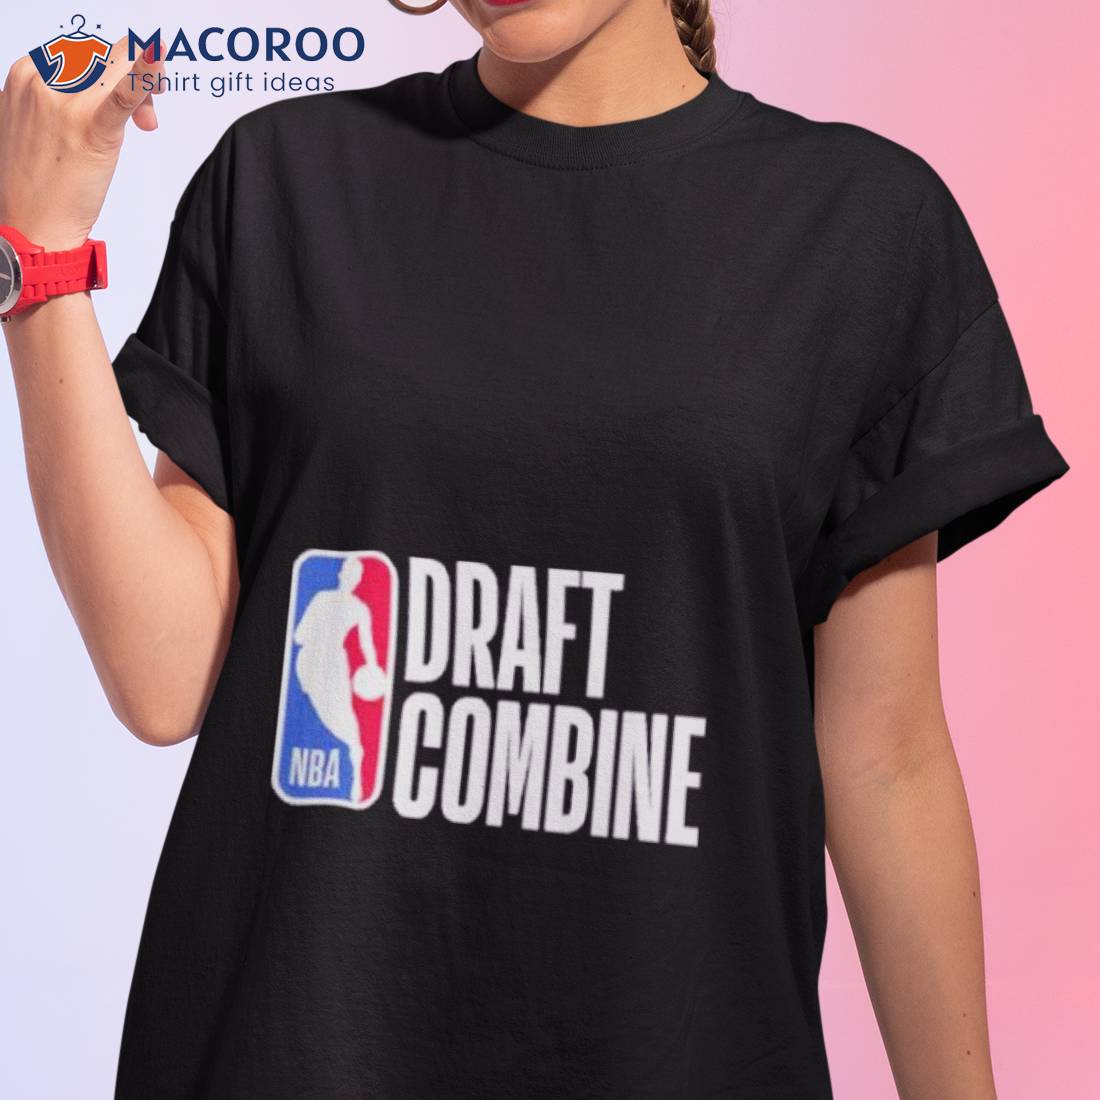 Nba Draft Combine Shirt